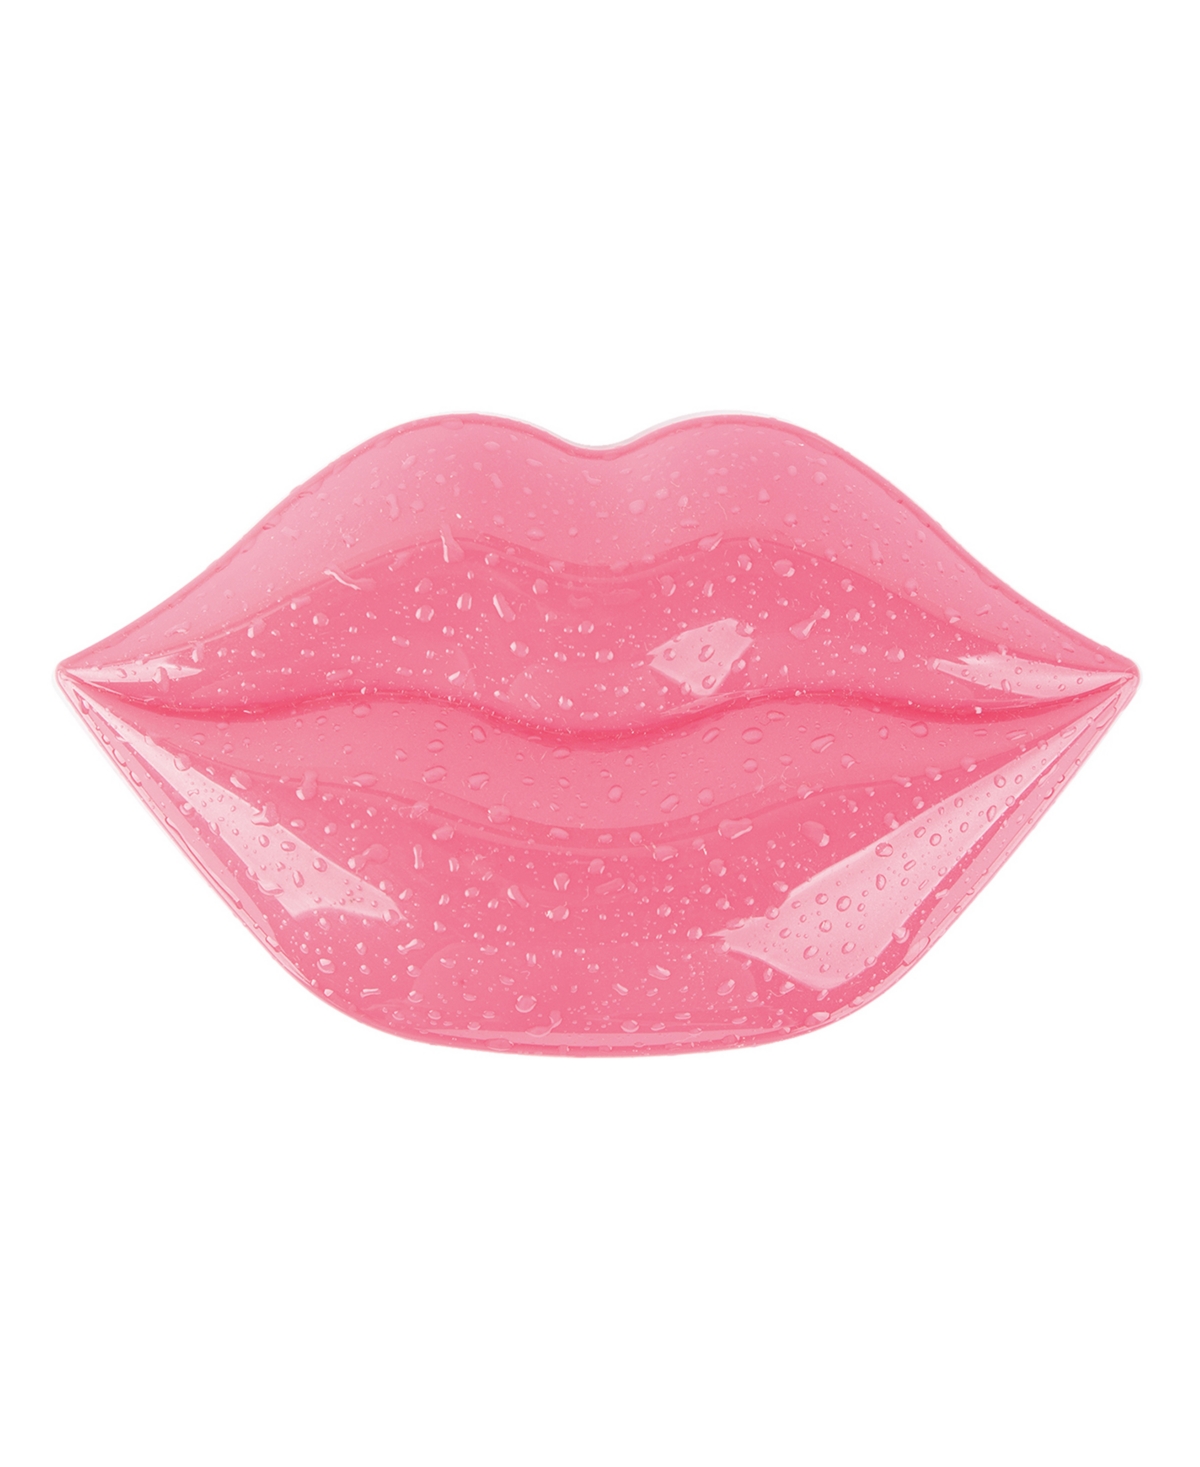 Kocostar Pink Lip Mask